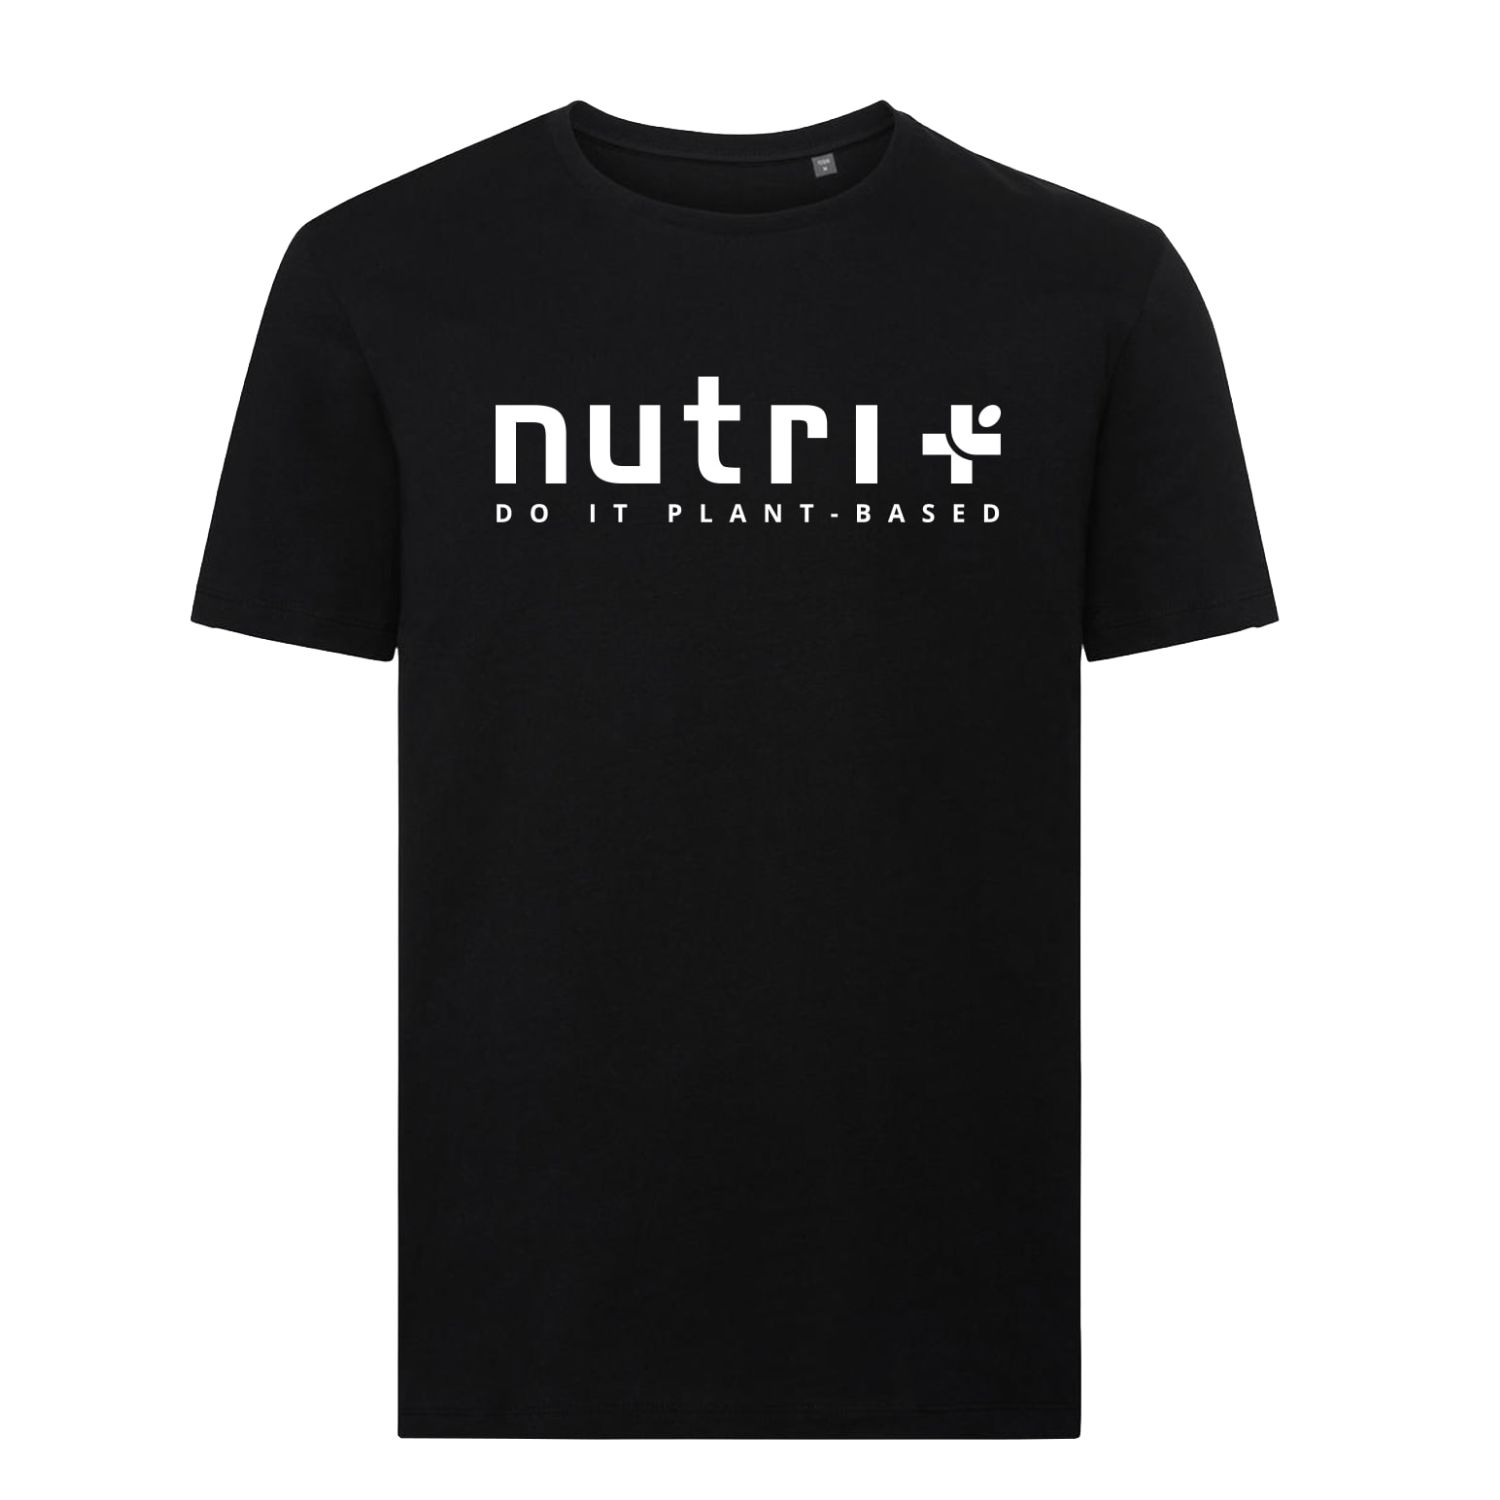 Team nutri+ Men's T-Shirt